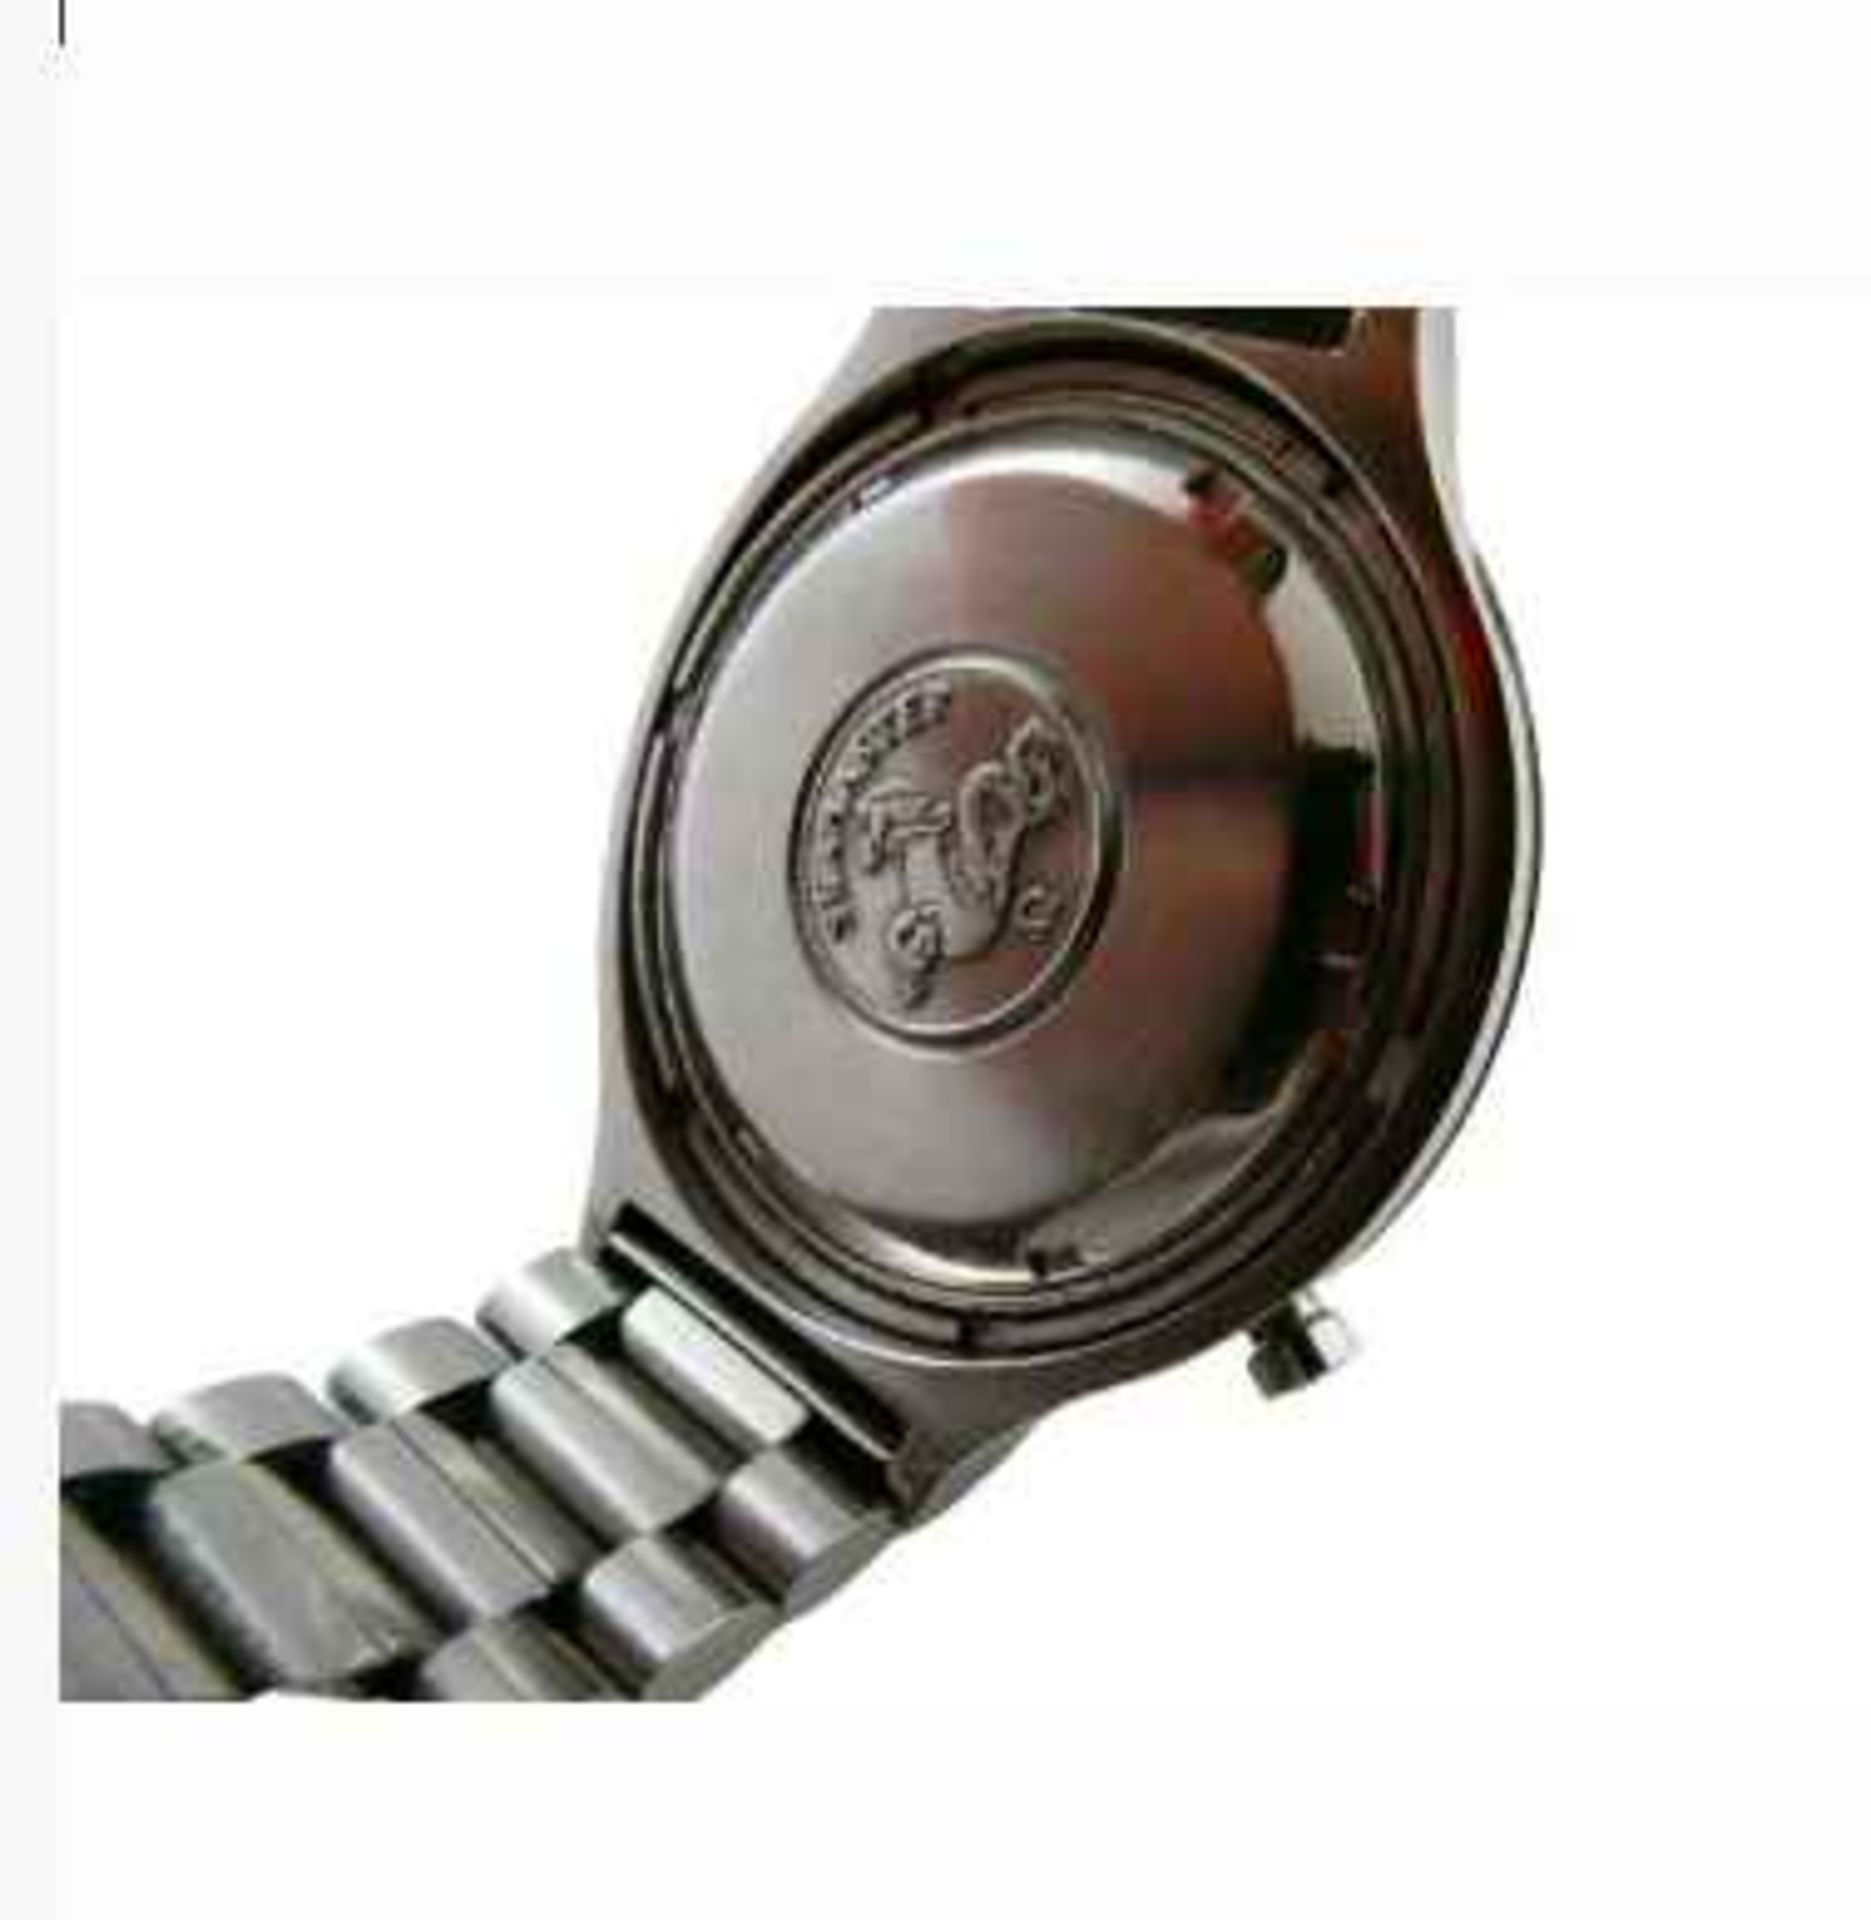 Omega f300 Watch | Vintage - Image 4 of 5